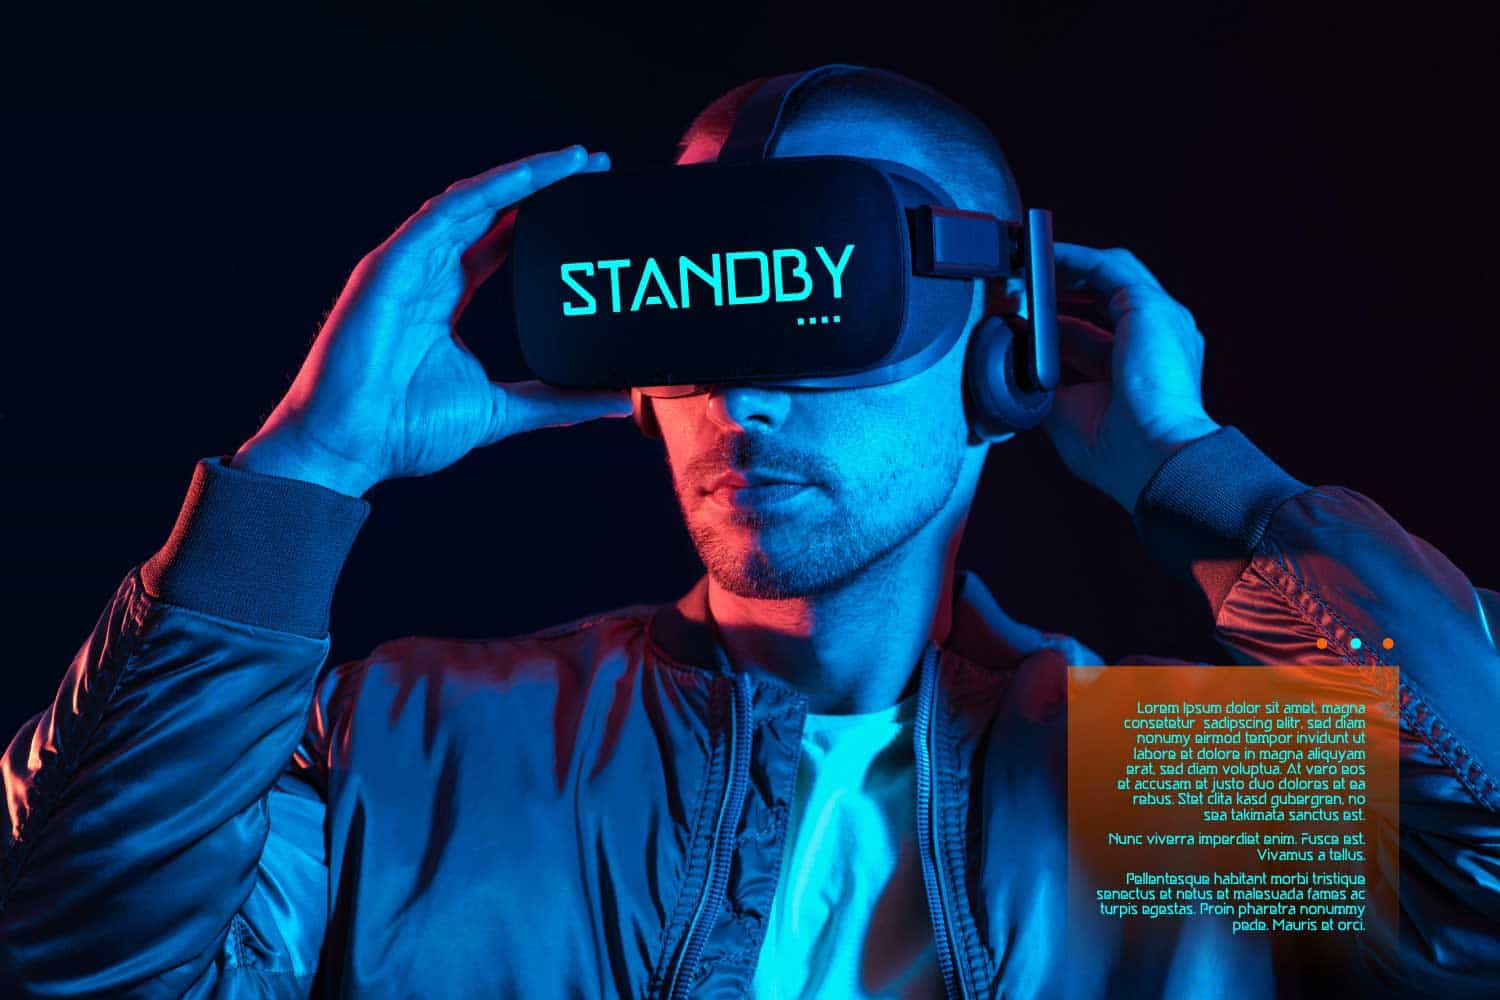 futuristic font pentavalent banner virtual reality